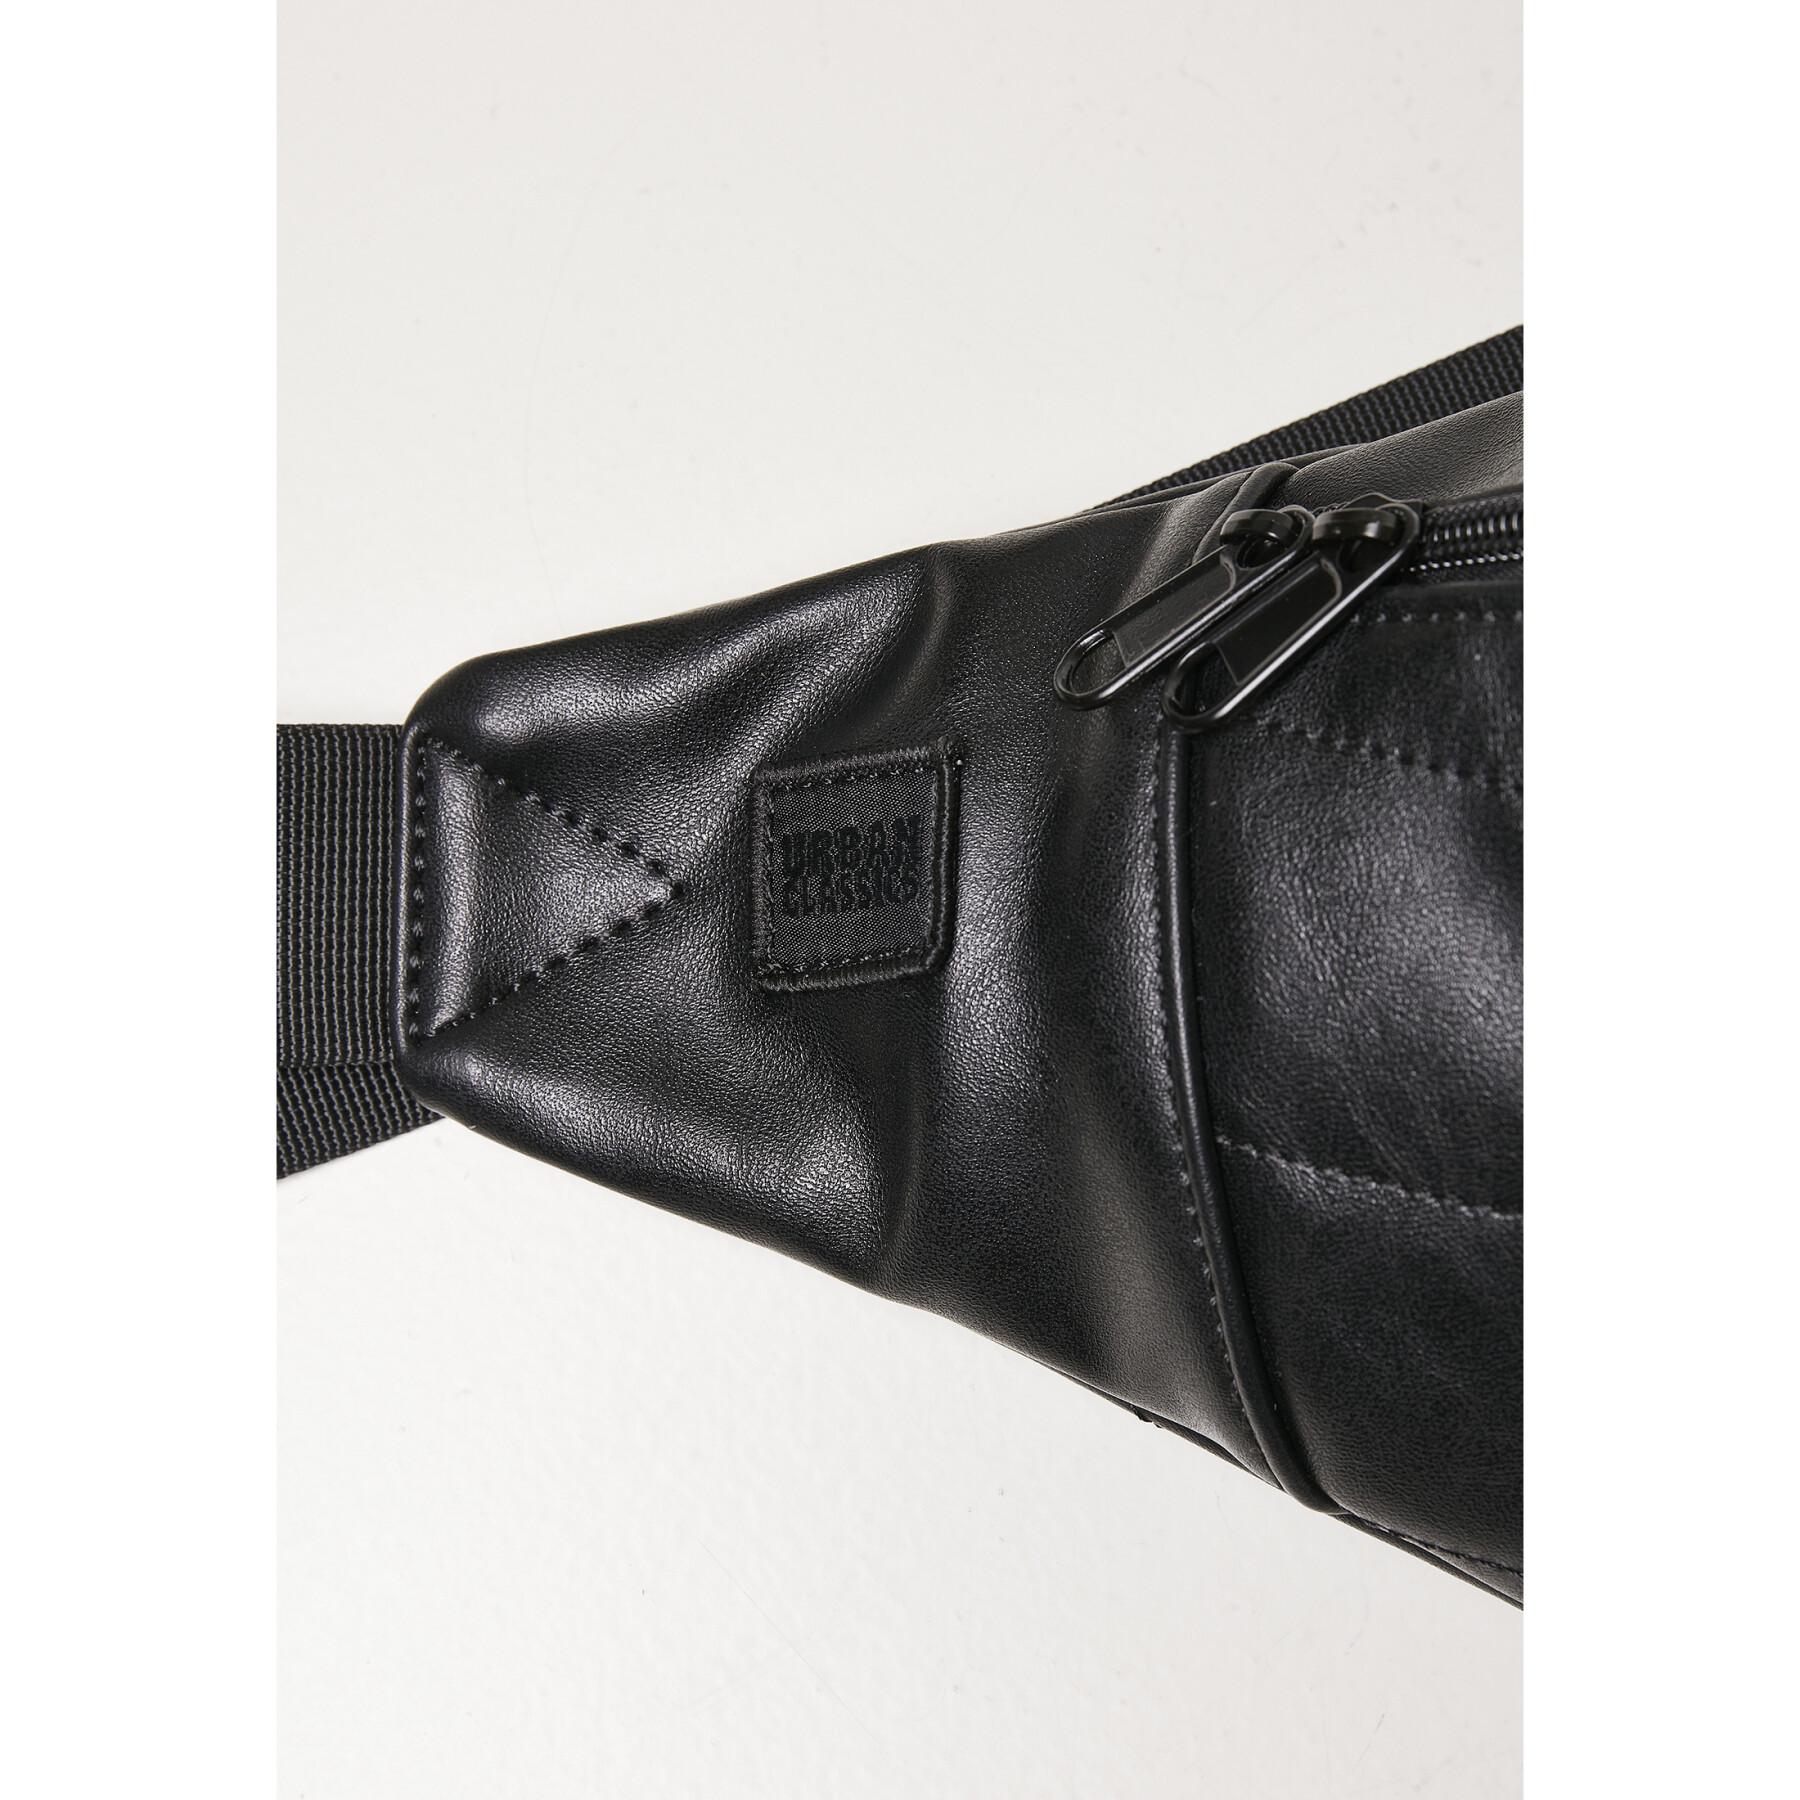 Tasche Urban Classics puffer imitation leather shoulder